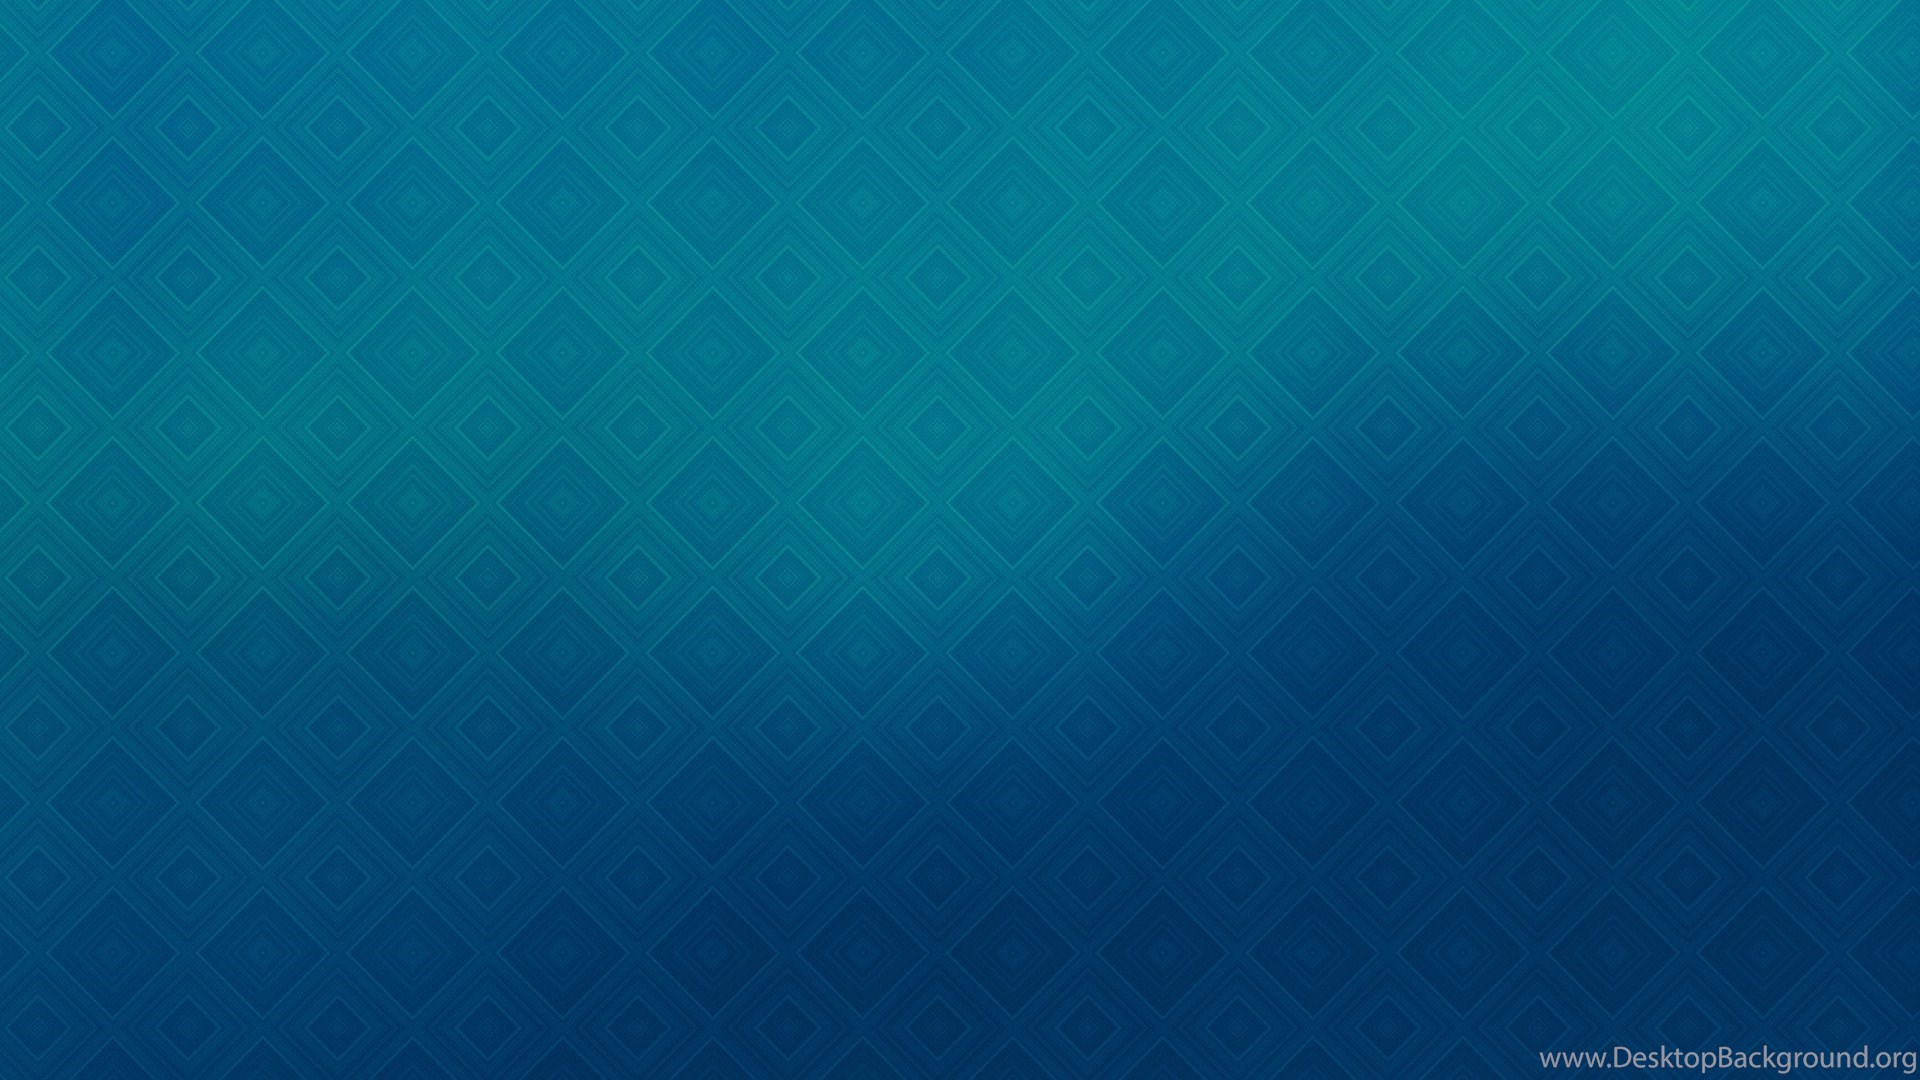 Simple Blue Backgrounds Wallpapers By Kelsey Cook On FL Desktop